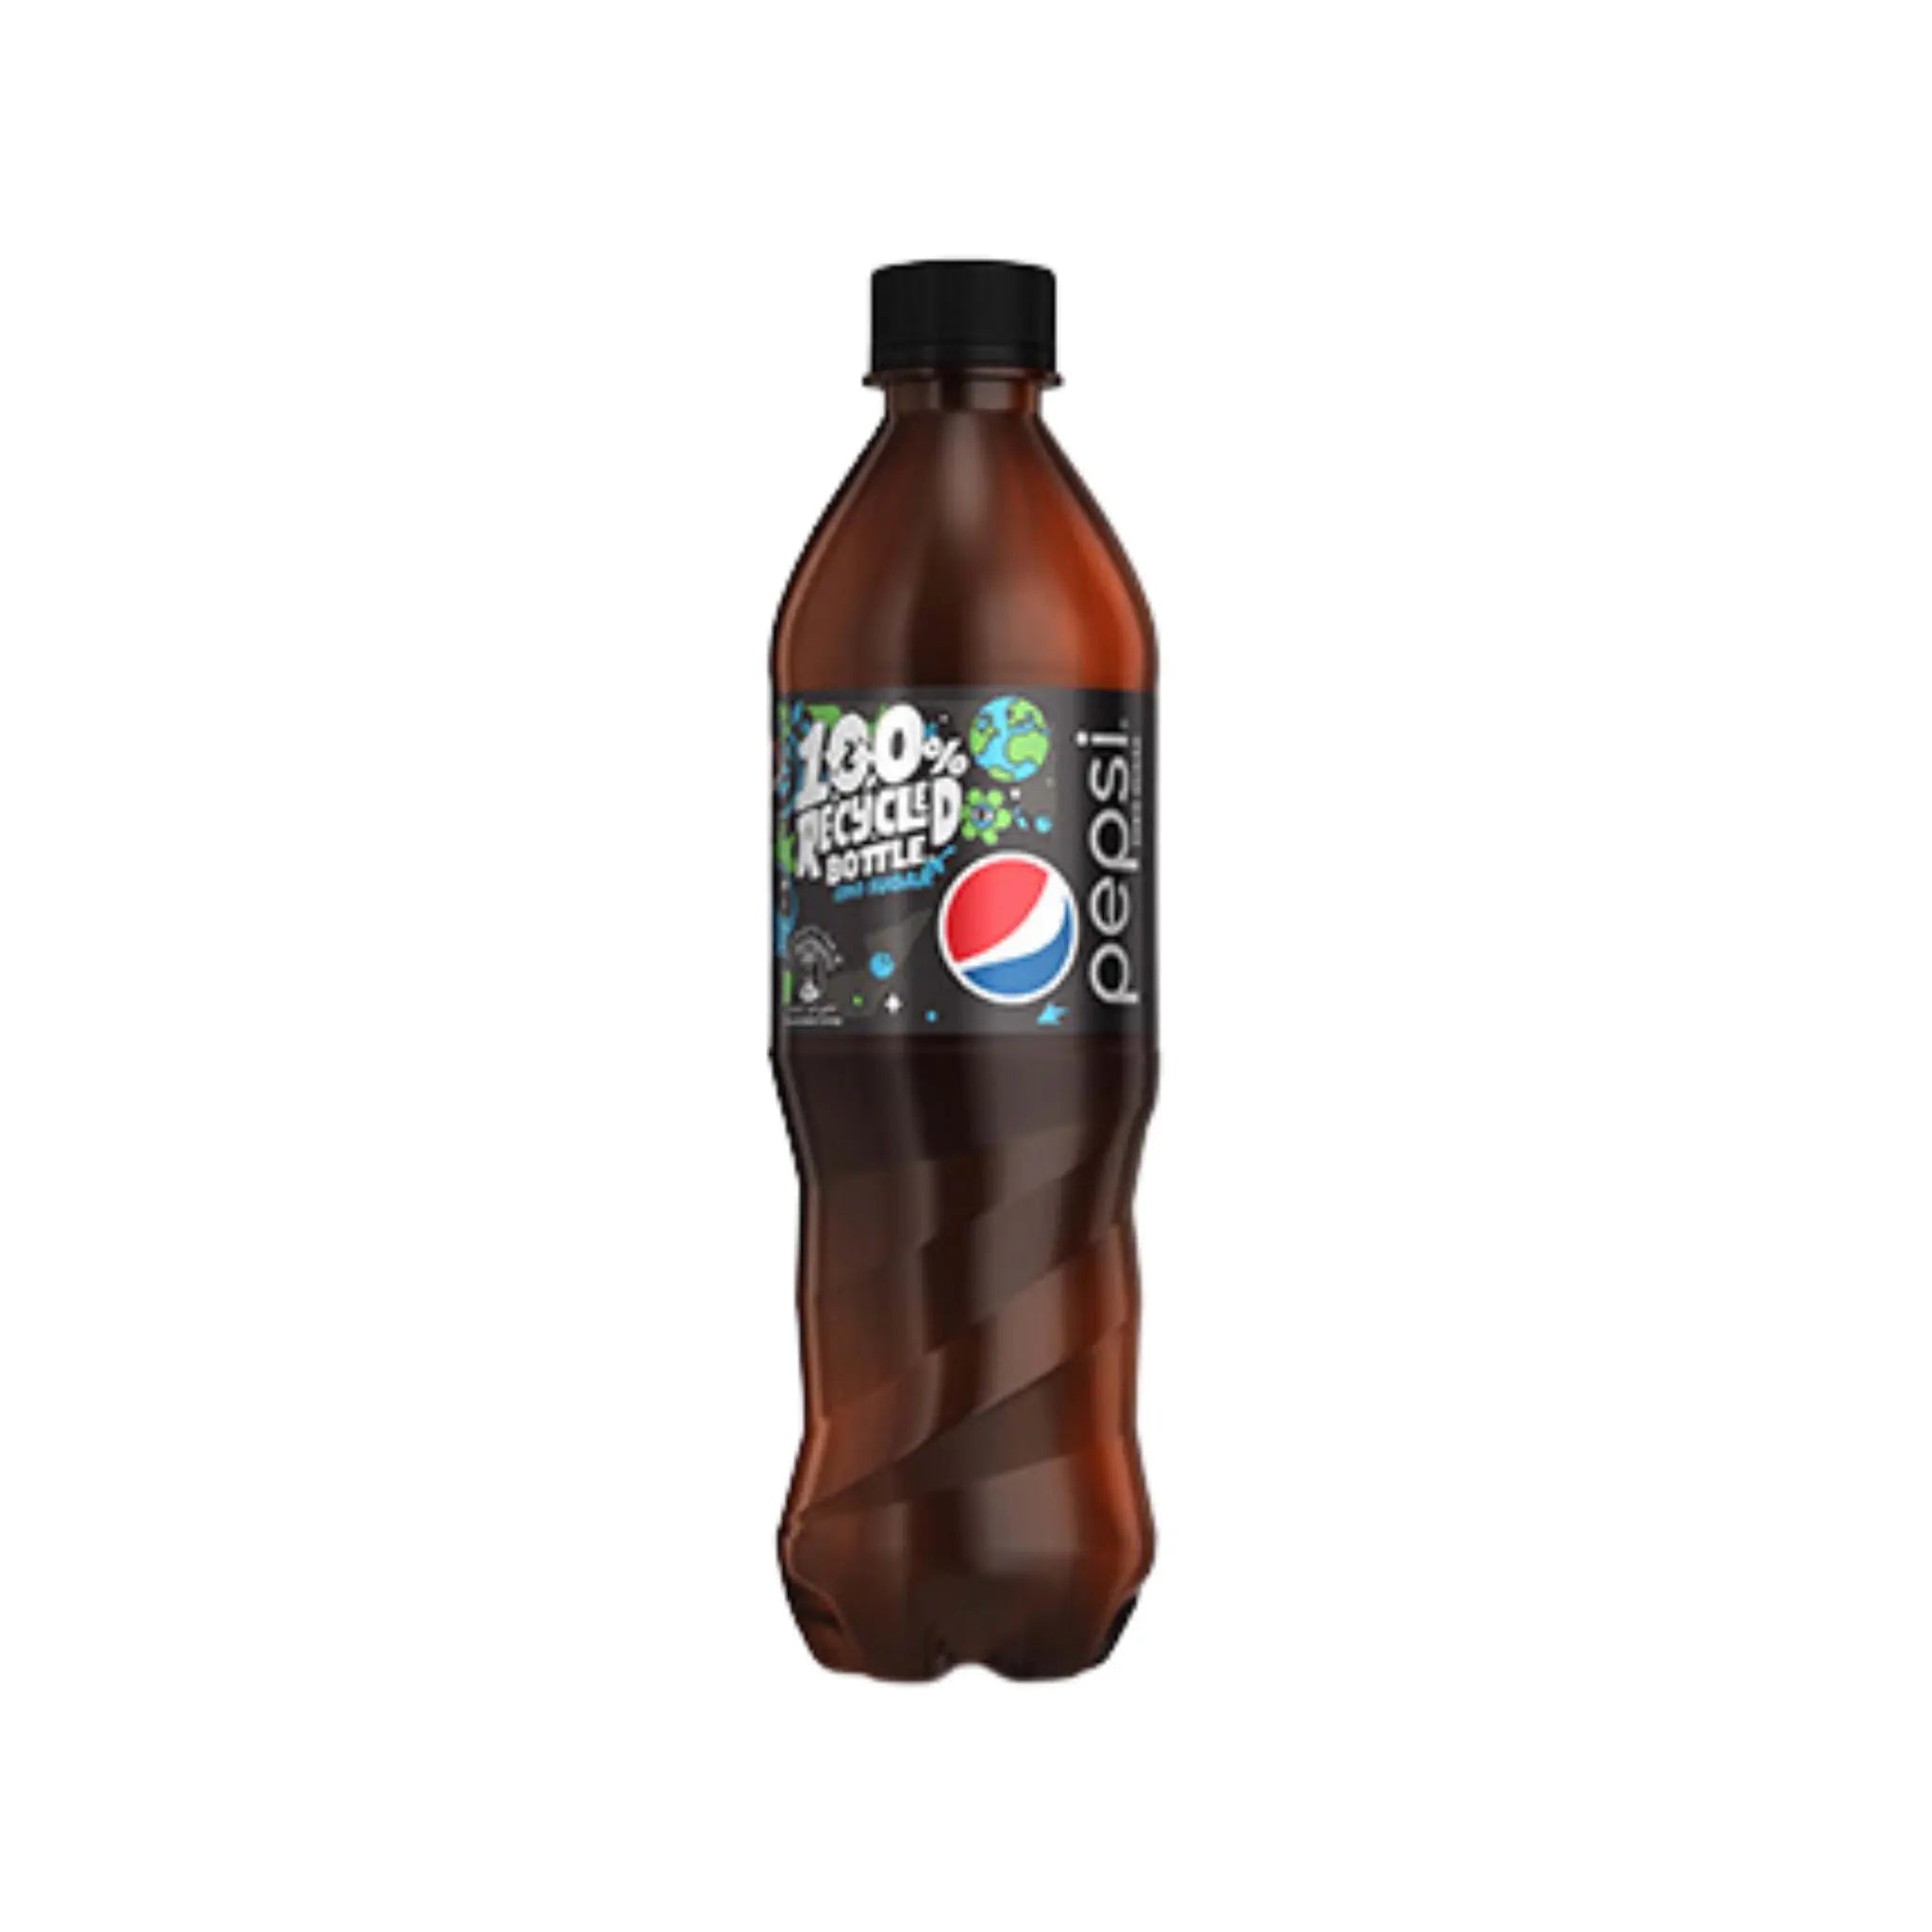 Pepsi Zero PET 500 ml - 24x500ml (1 carton) Marino.AE